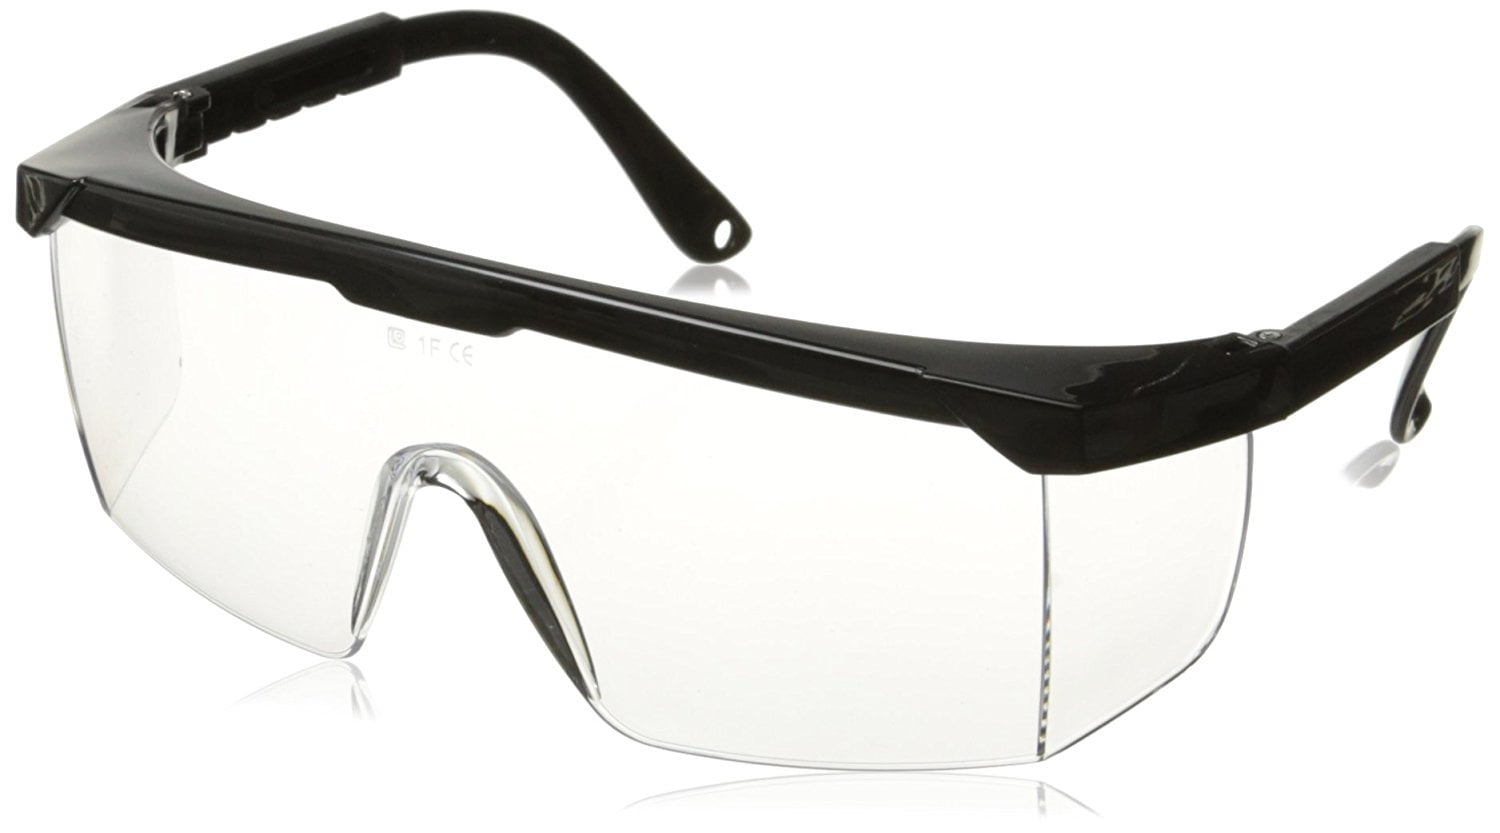 Smoke Lab Splash Polycarbonate Safety Glasses Lens ANSI Z97.1 Approved 2 pack 